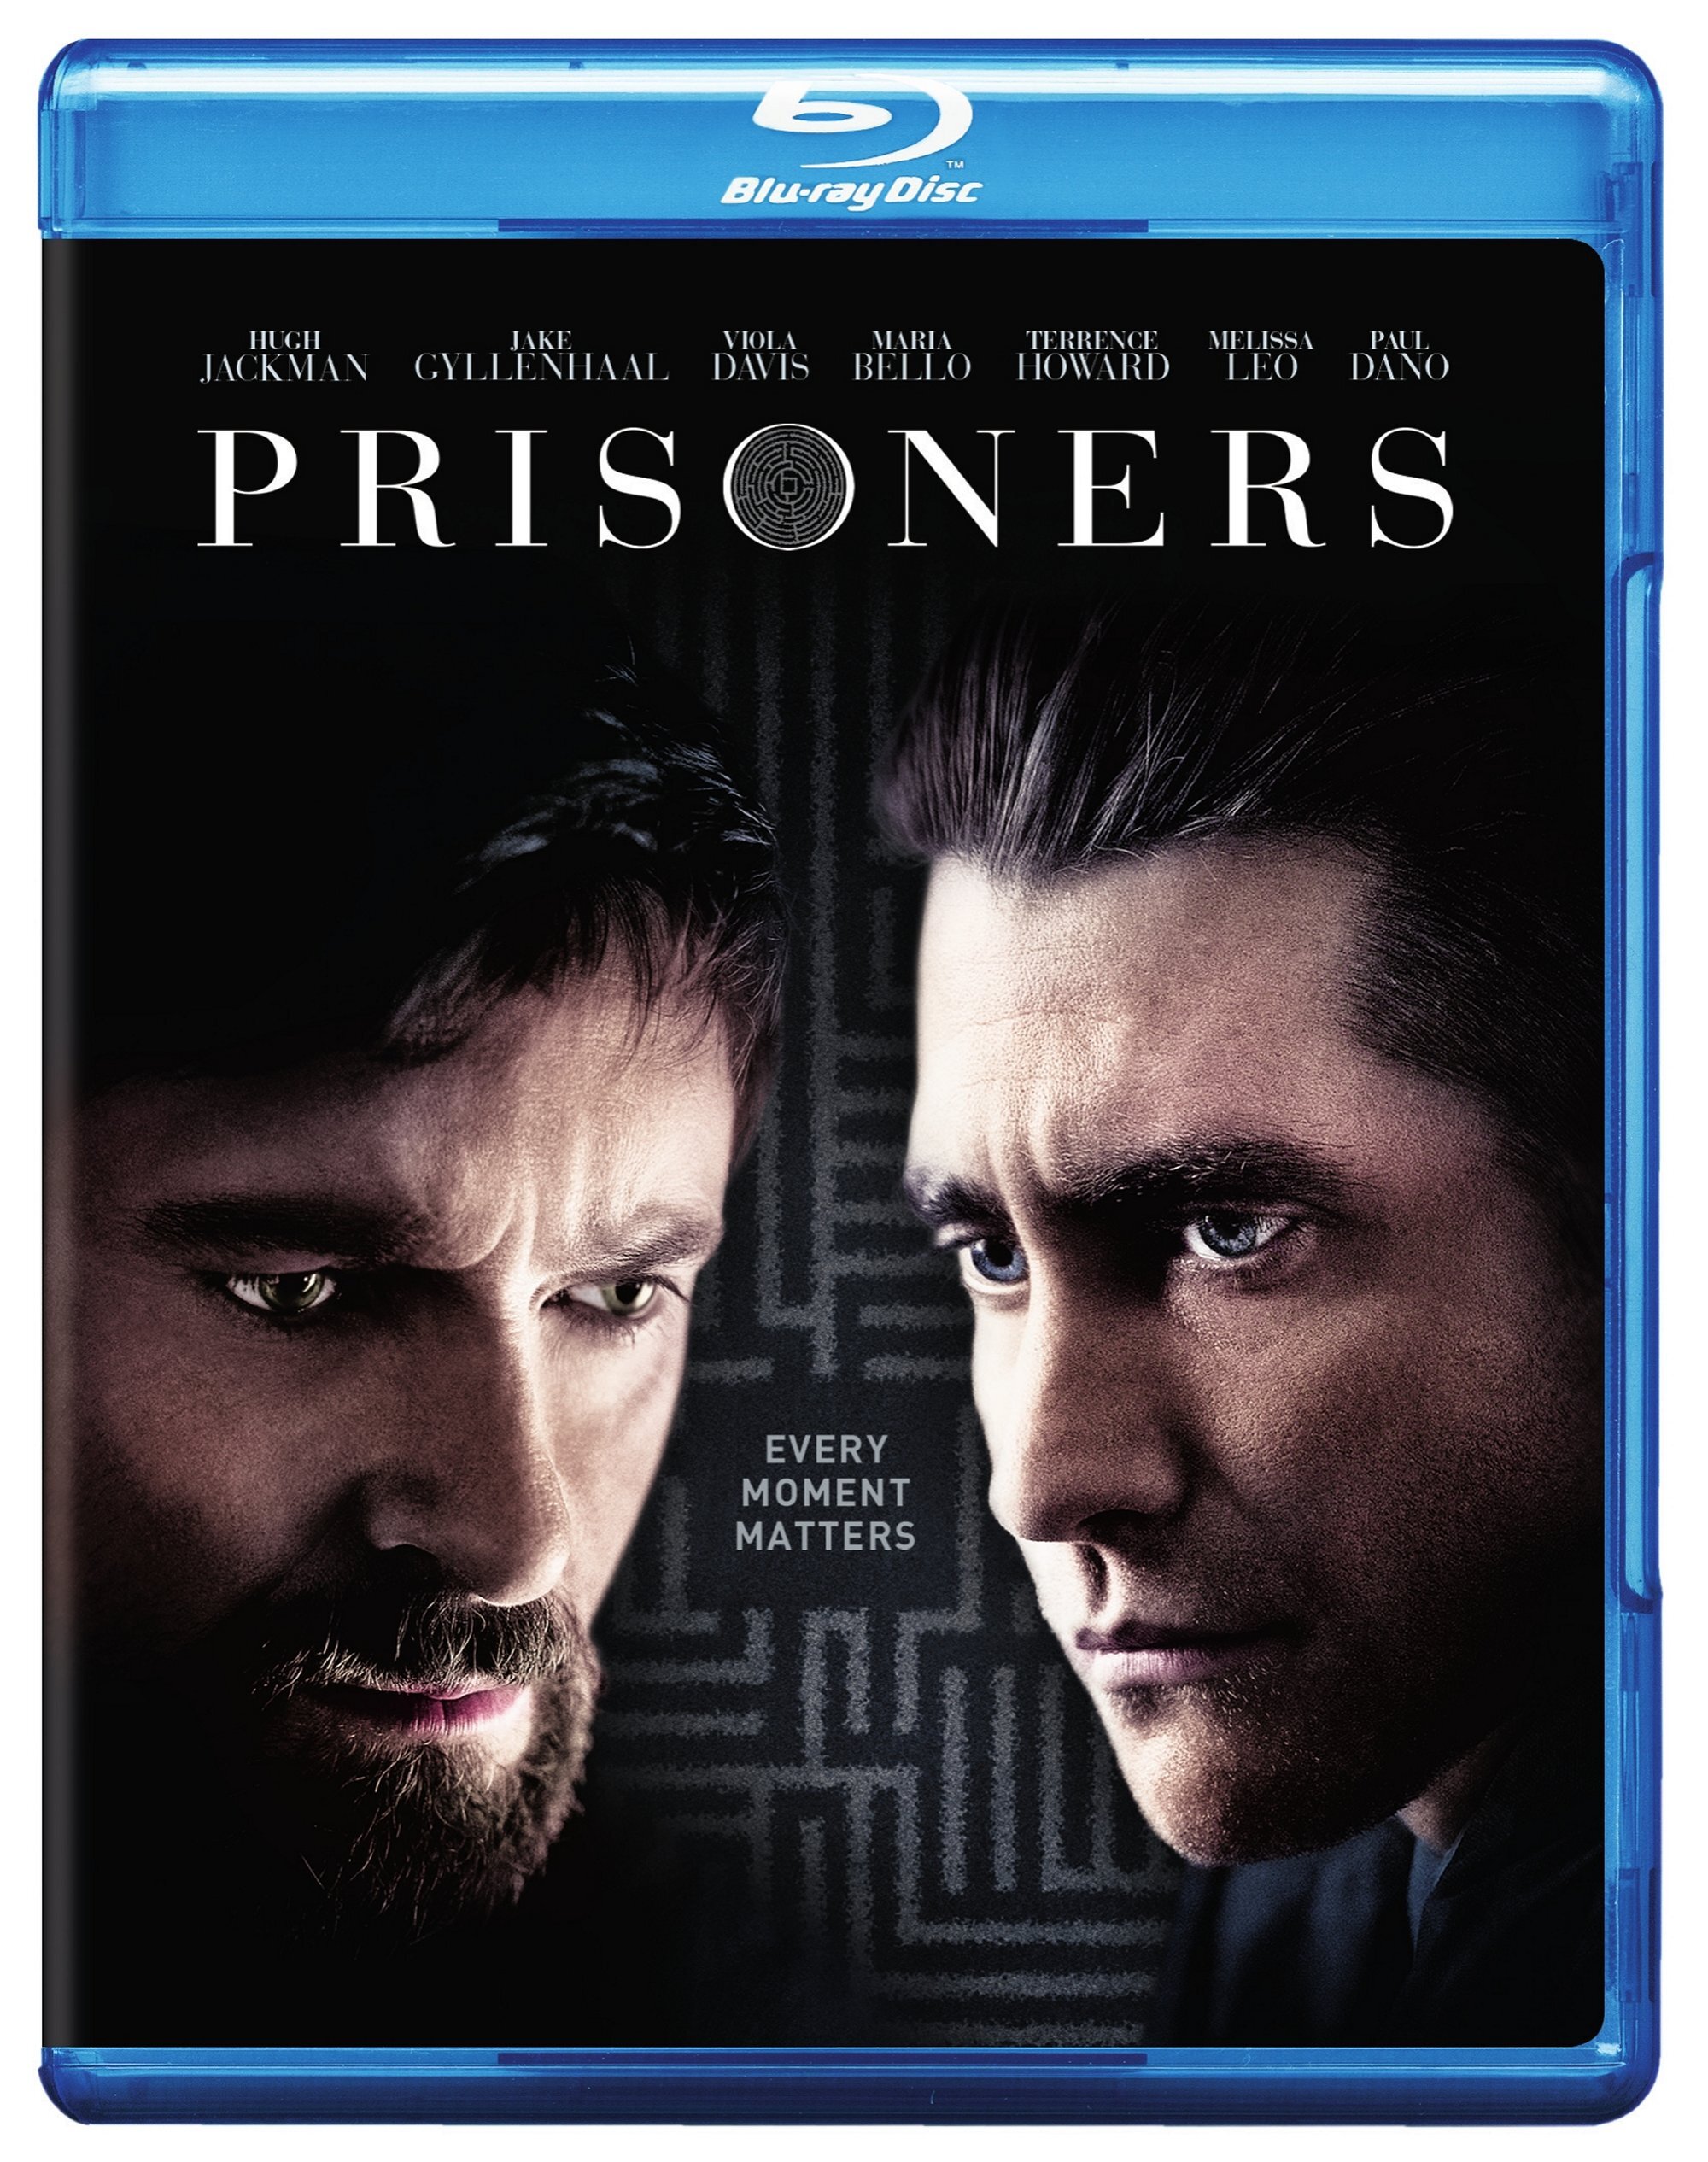 Prisoners - Blu-ray [ 2013 ]  - Thriller Movies On Blu-ray - Movies On GRUV